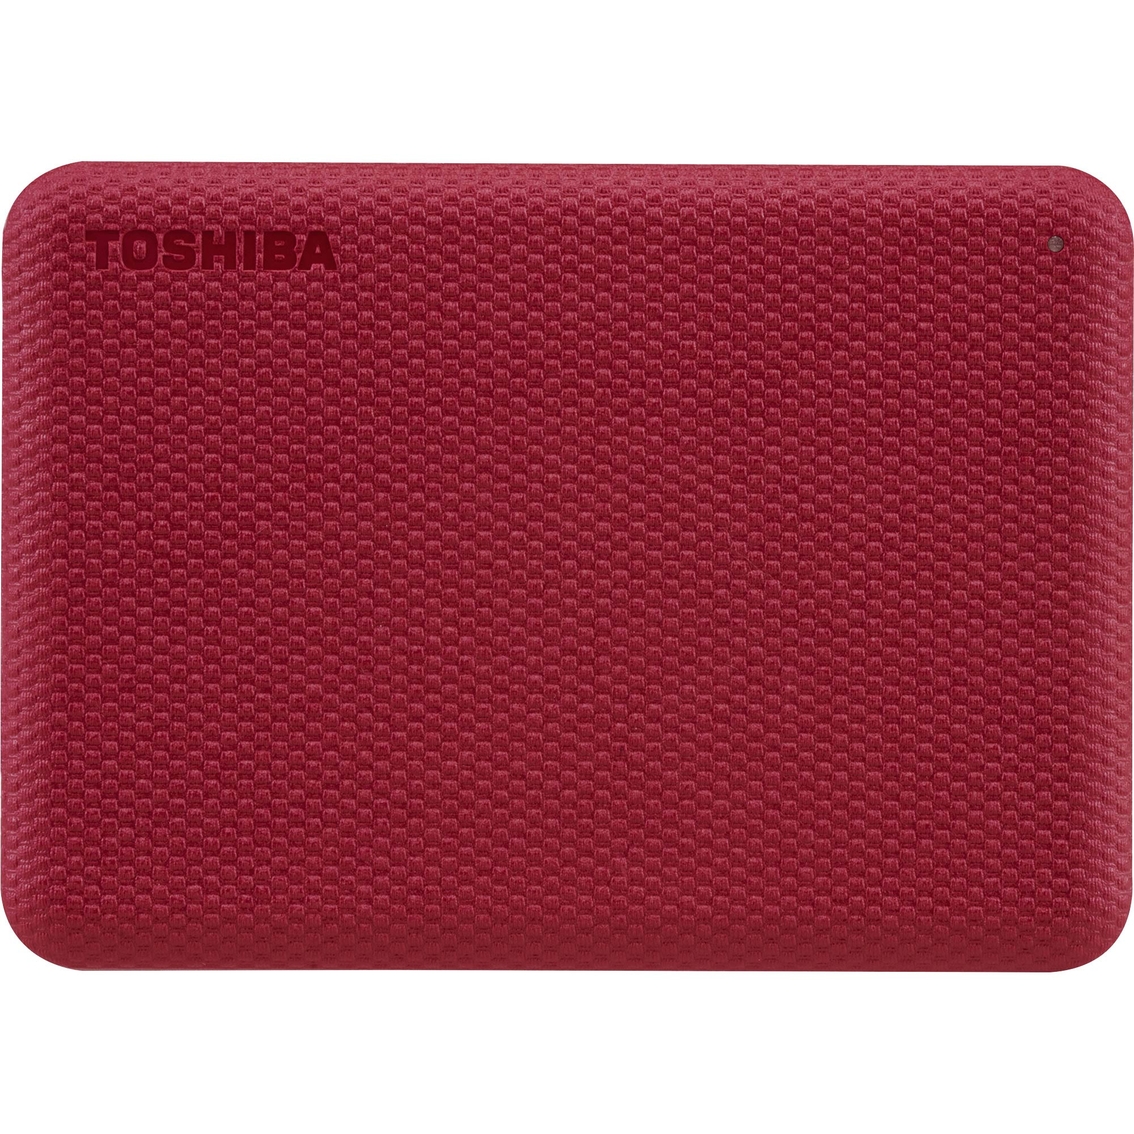 Toshiba Canvio Advance Portable External 1TB Hard Drive - Image 2 of 4